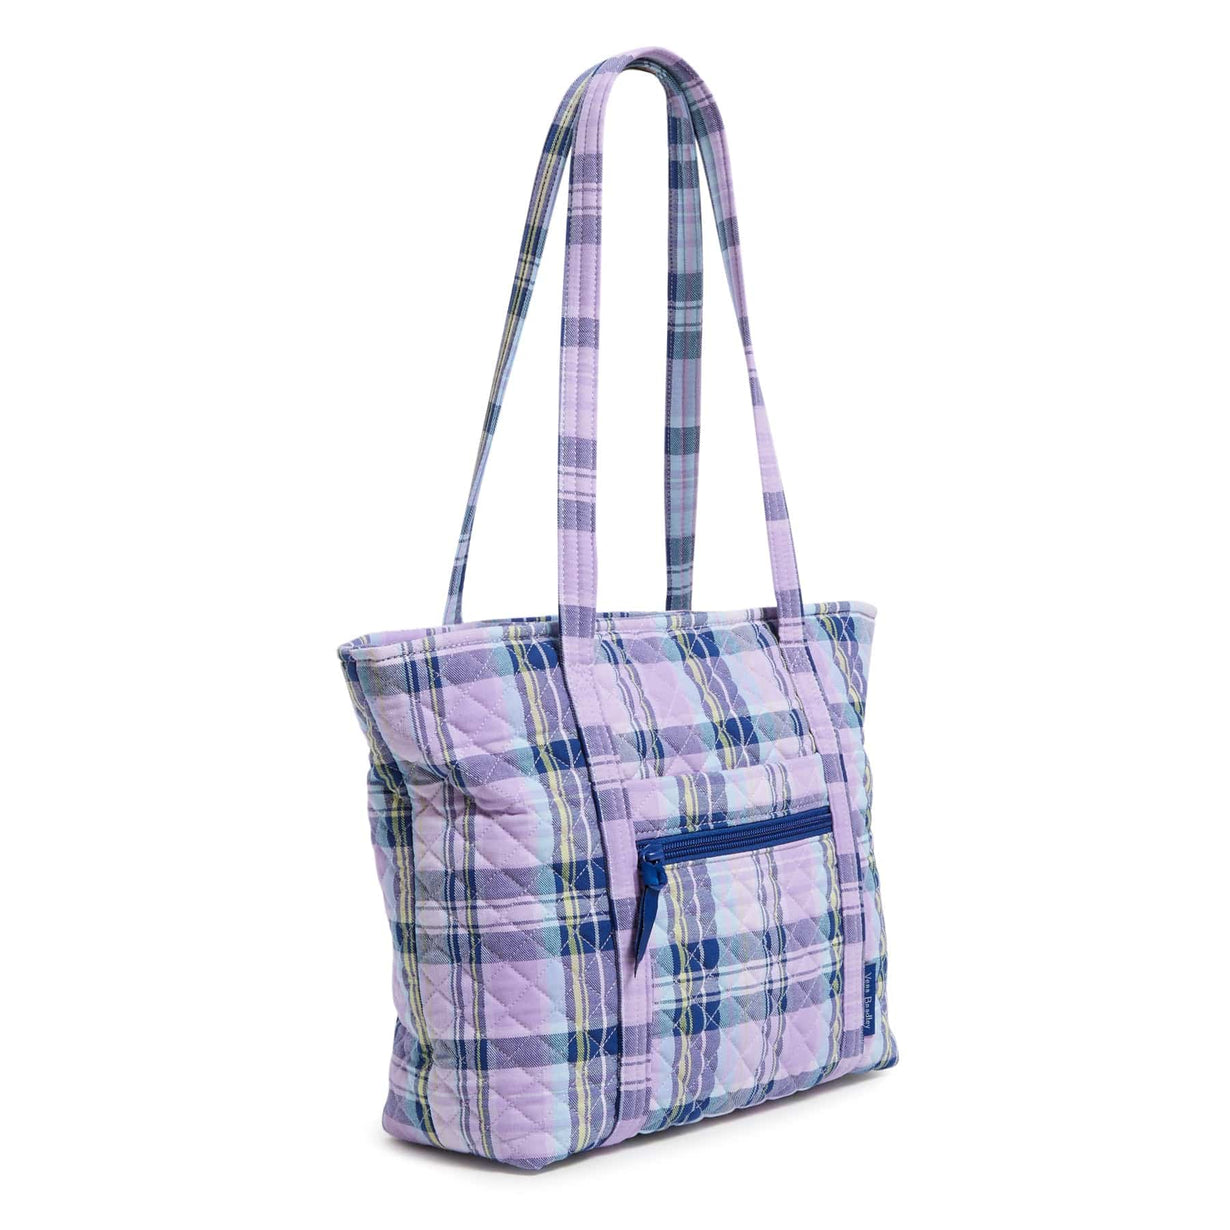 New Lady Bag Printed Plaid Shell Bag One Shoulder Bag Crossbody